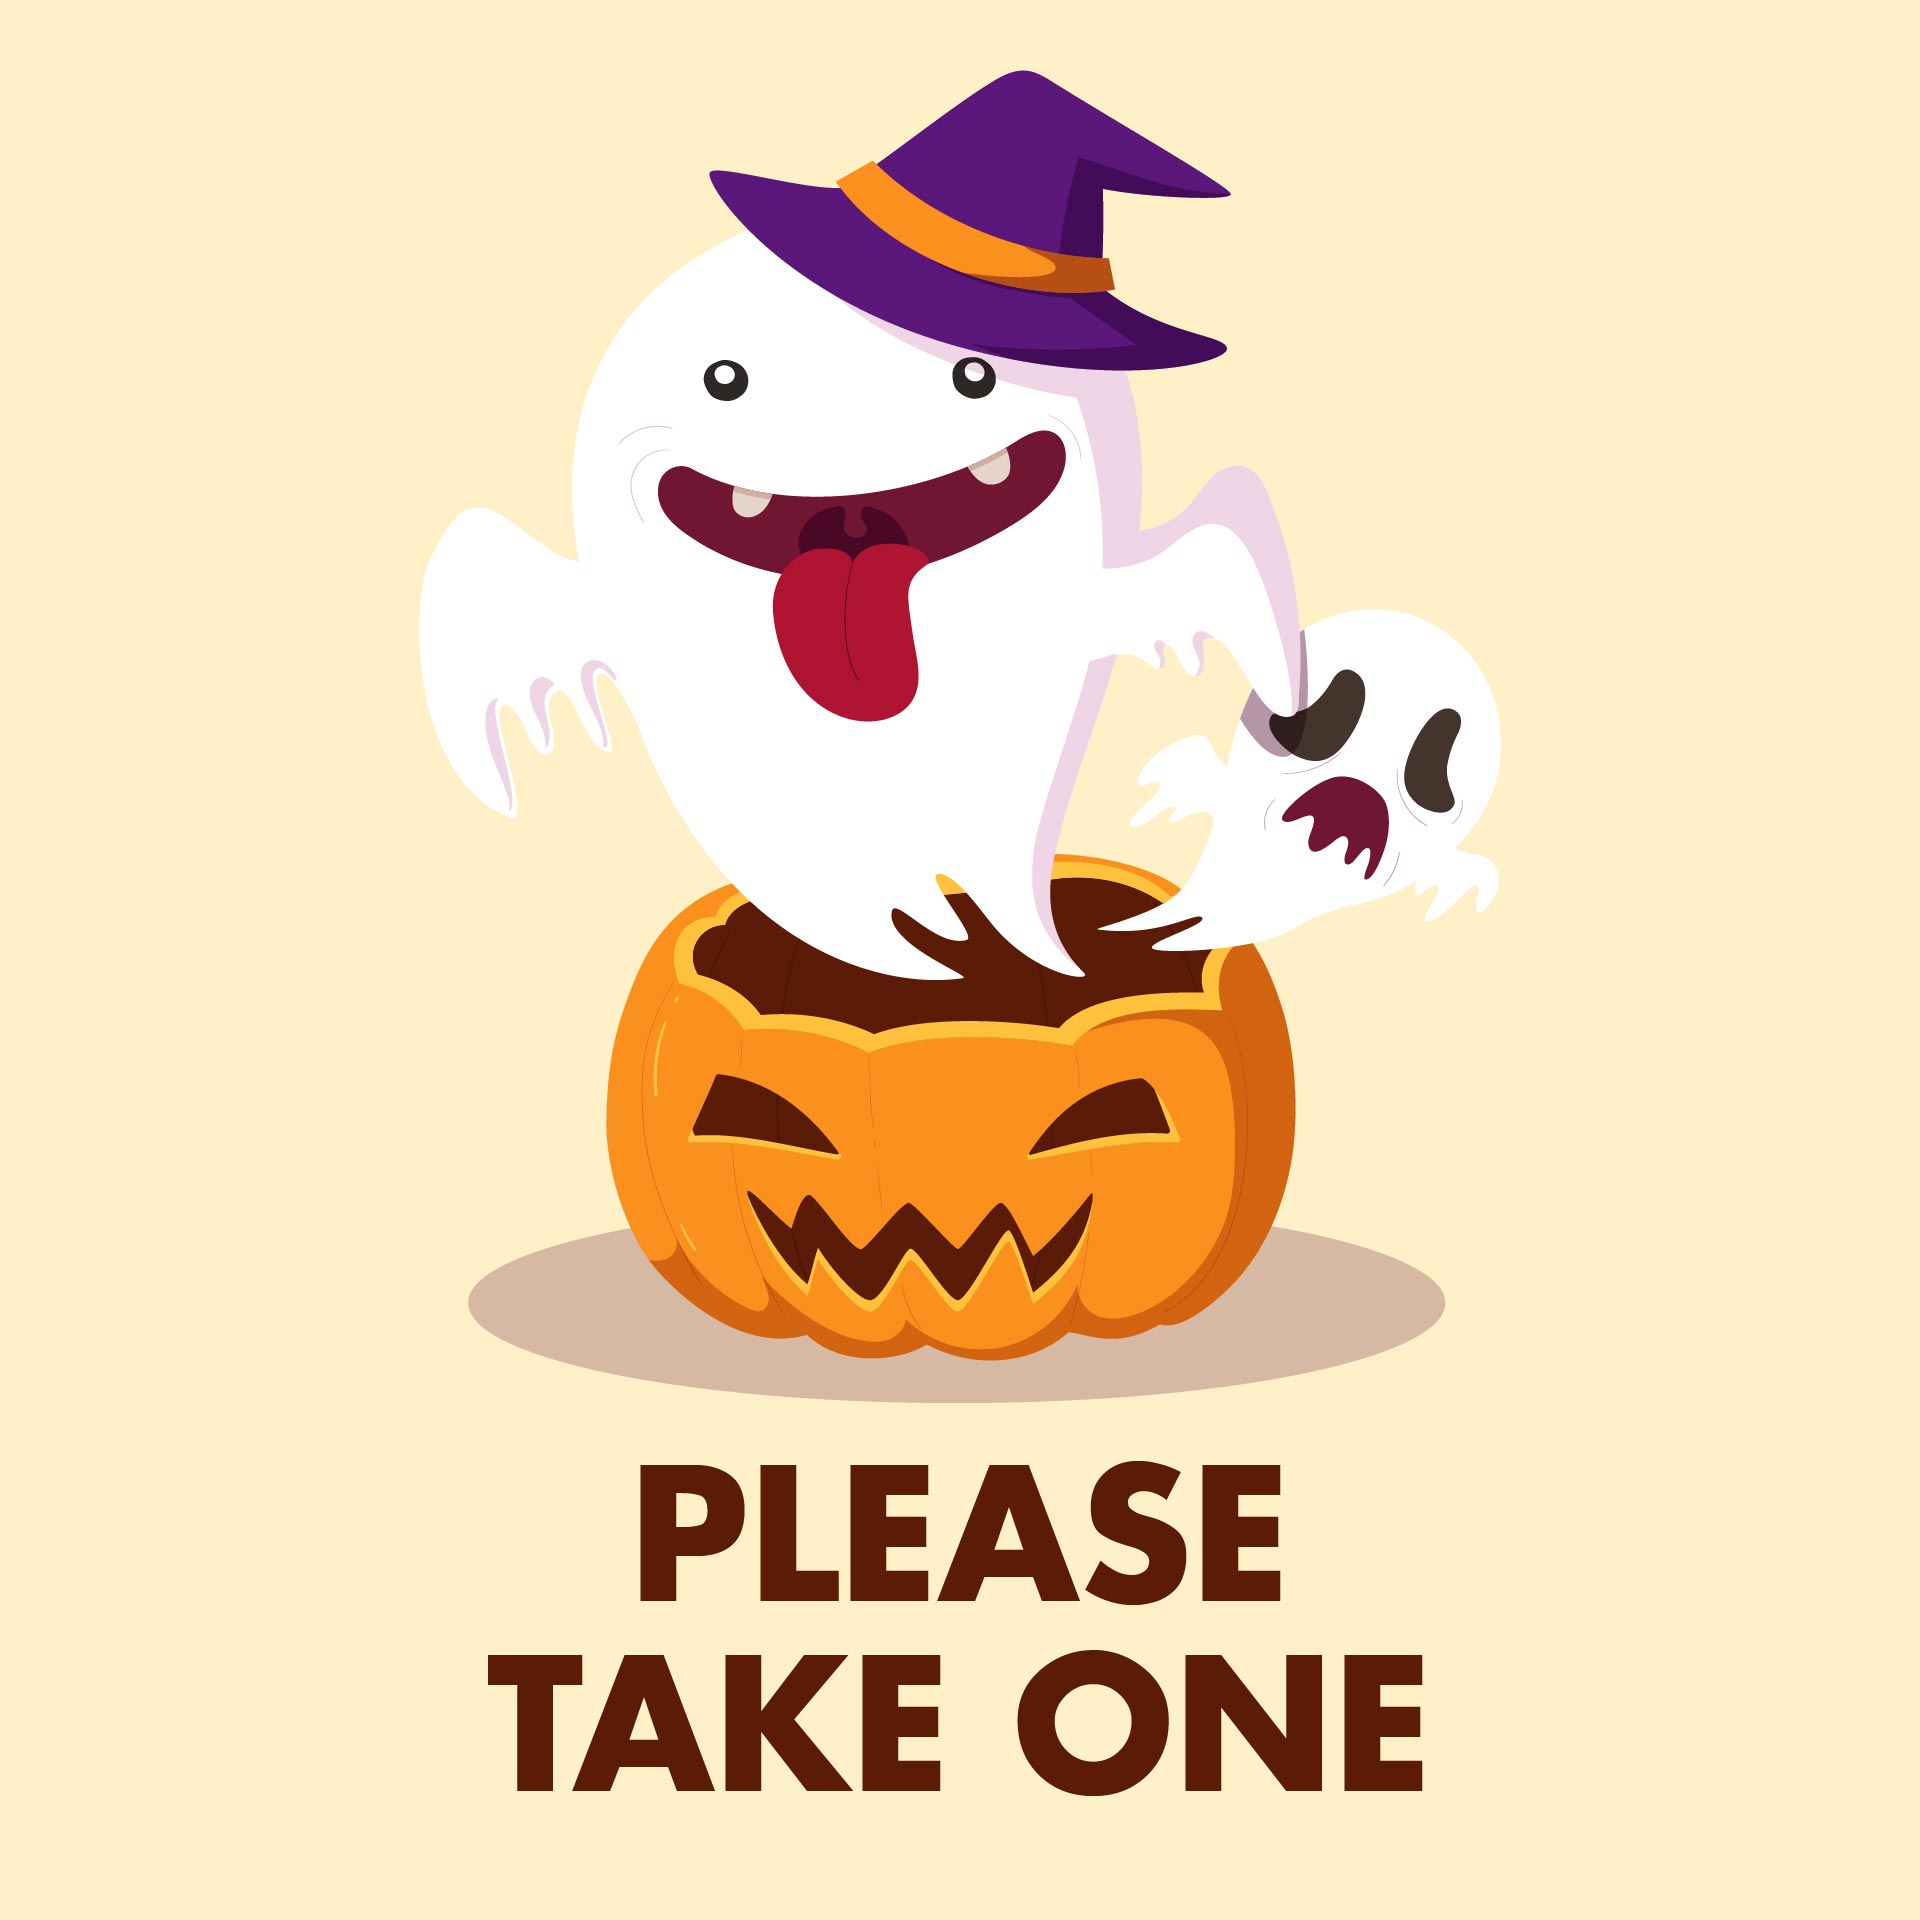 15-best-halloween-signs-printable-take-2-please-pdf-for-free-at-printablee